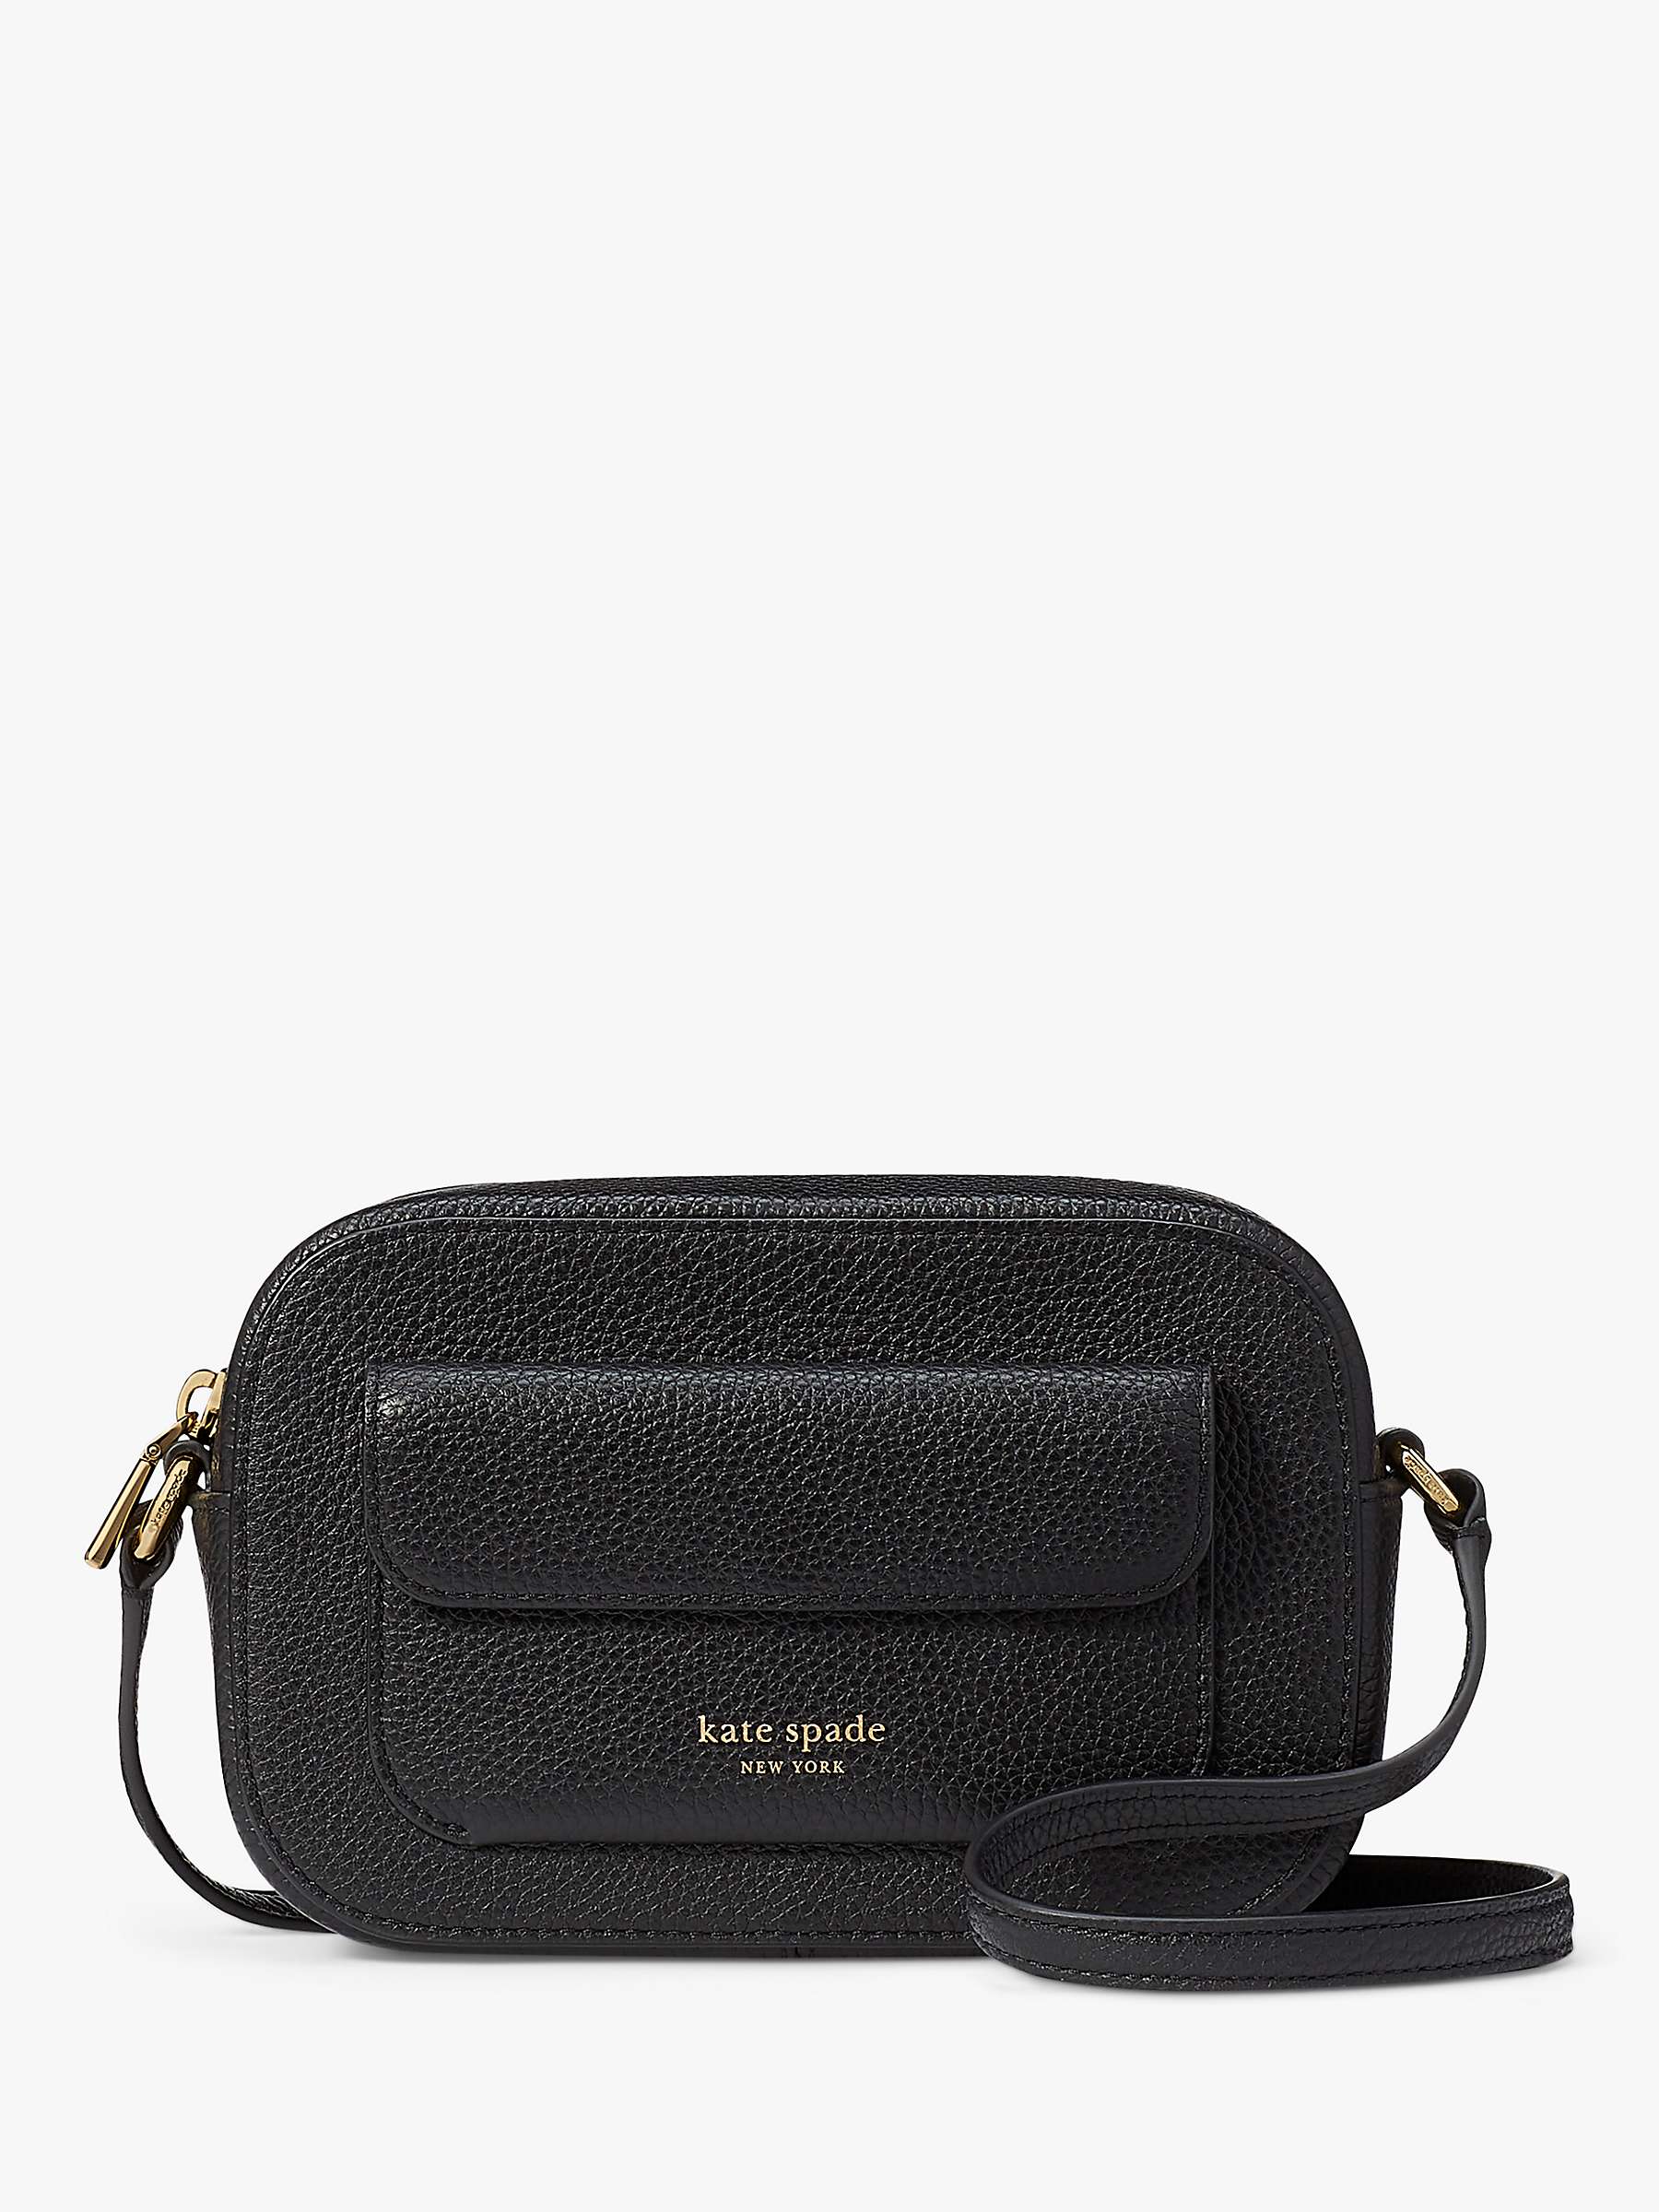 Buy kate spade new york Ava Leather Cross Body Bag, Black Online at johnlewis.com